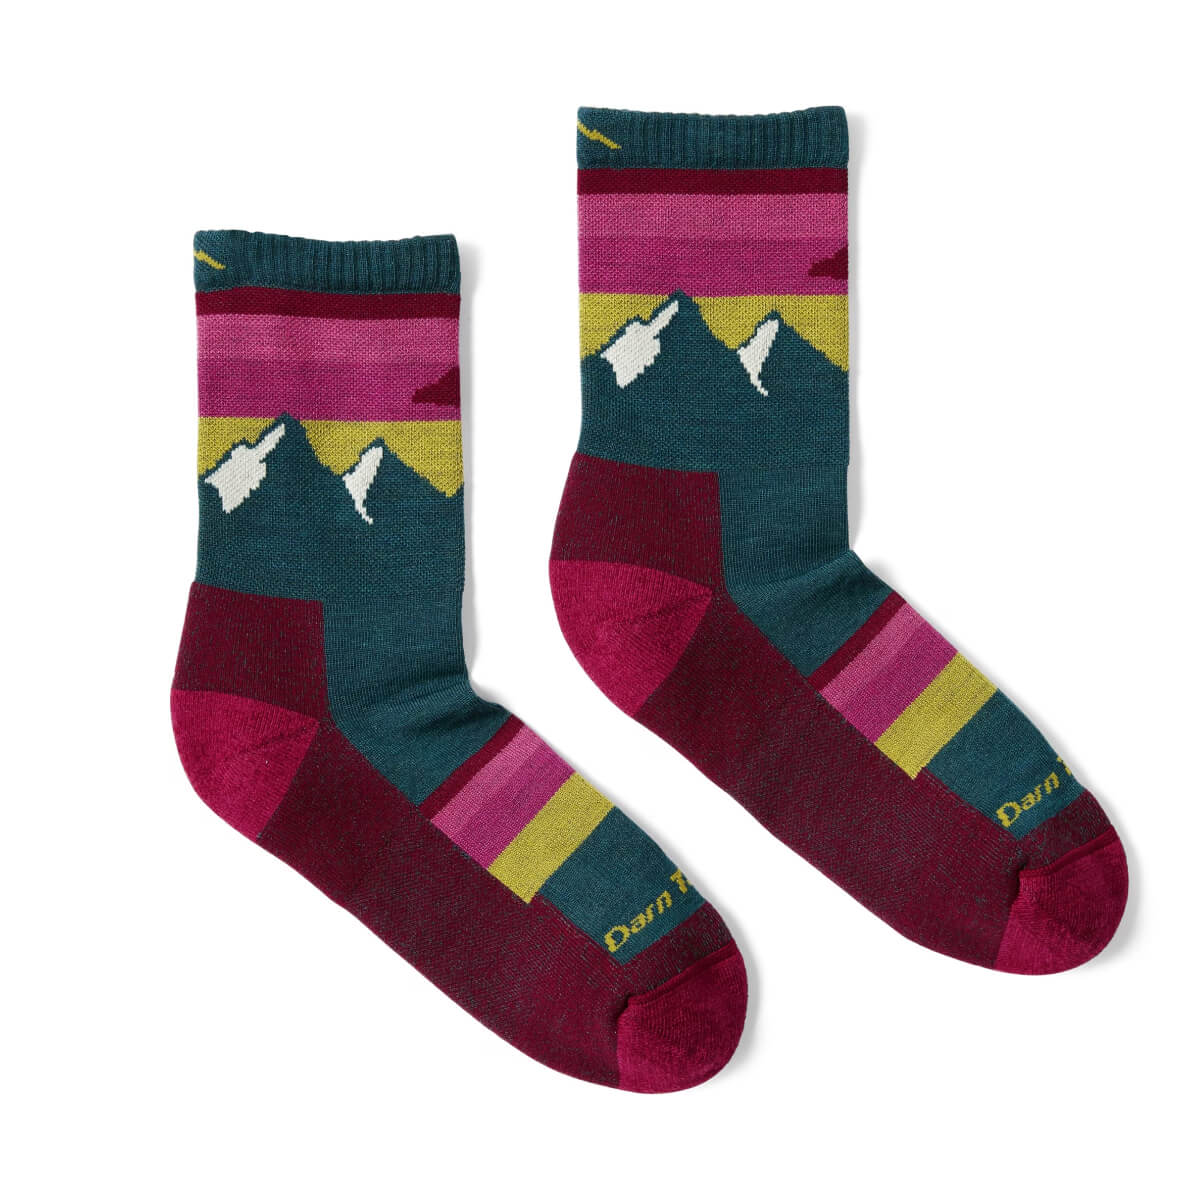 Darn Tough Lightweight socks as a hiking gift idea